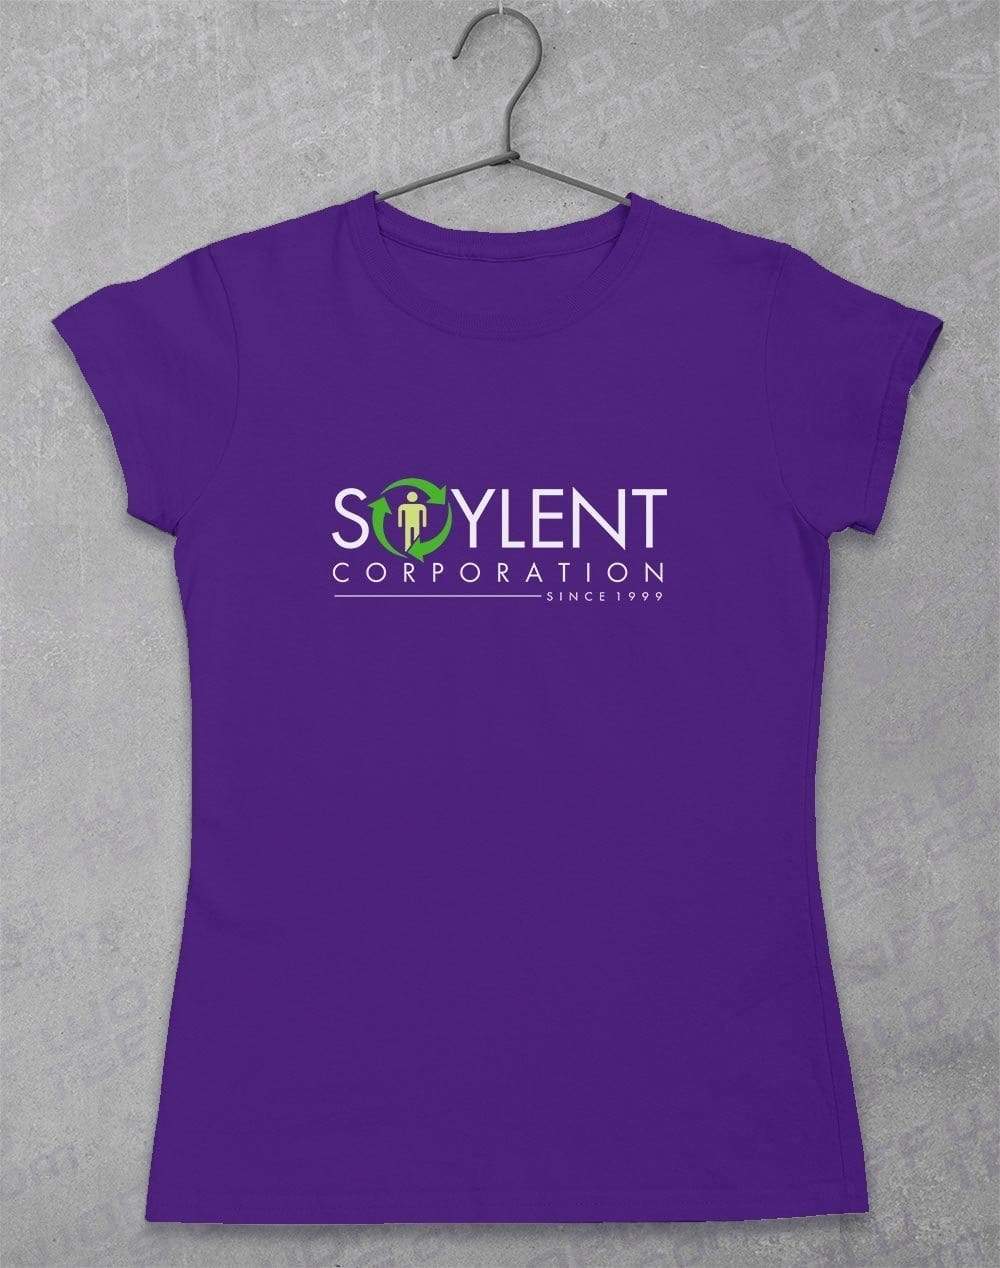 Soylent Corporation - Women's T-Shirt 8-10 / Lilac  - Off World Tees